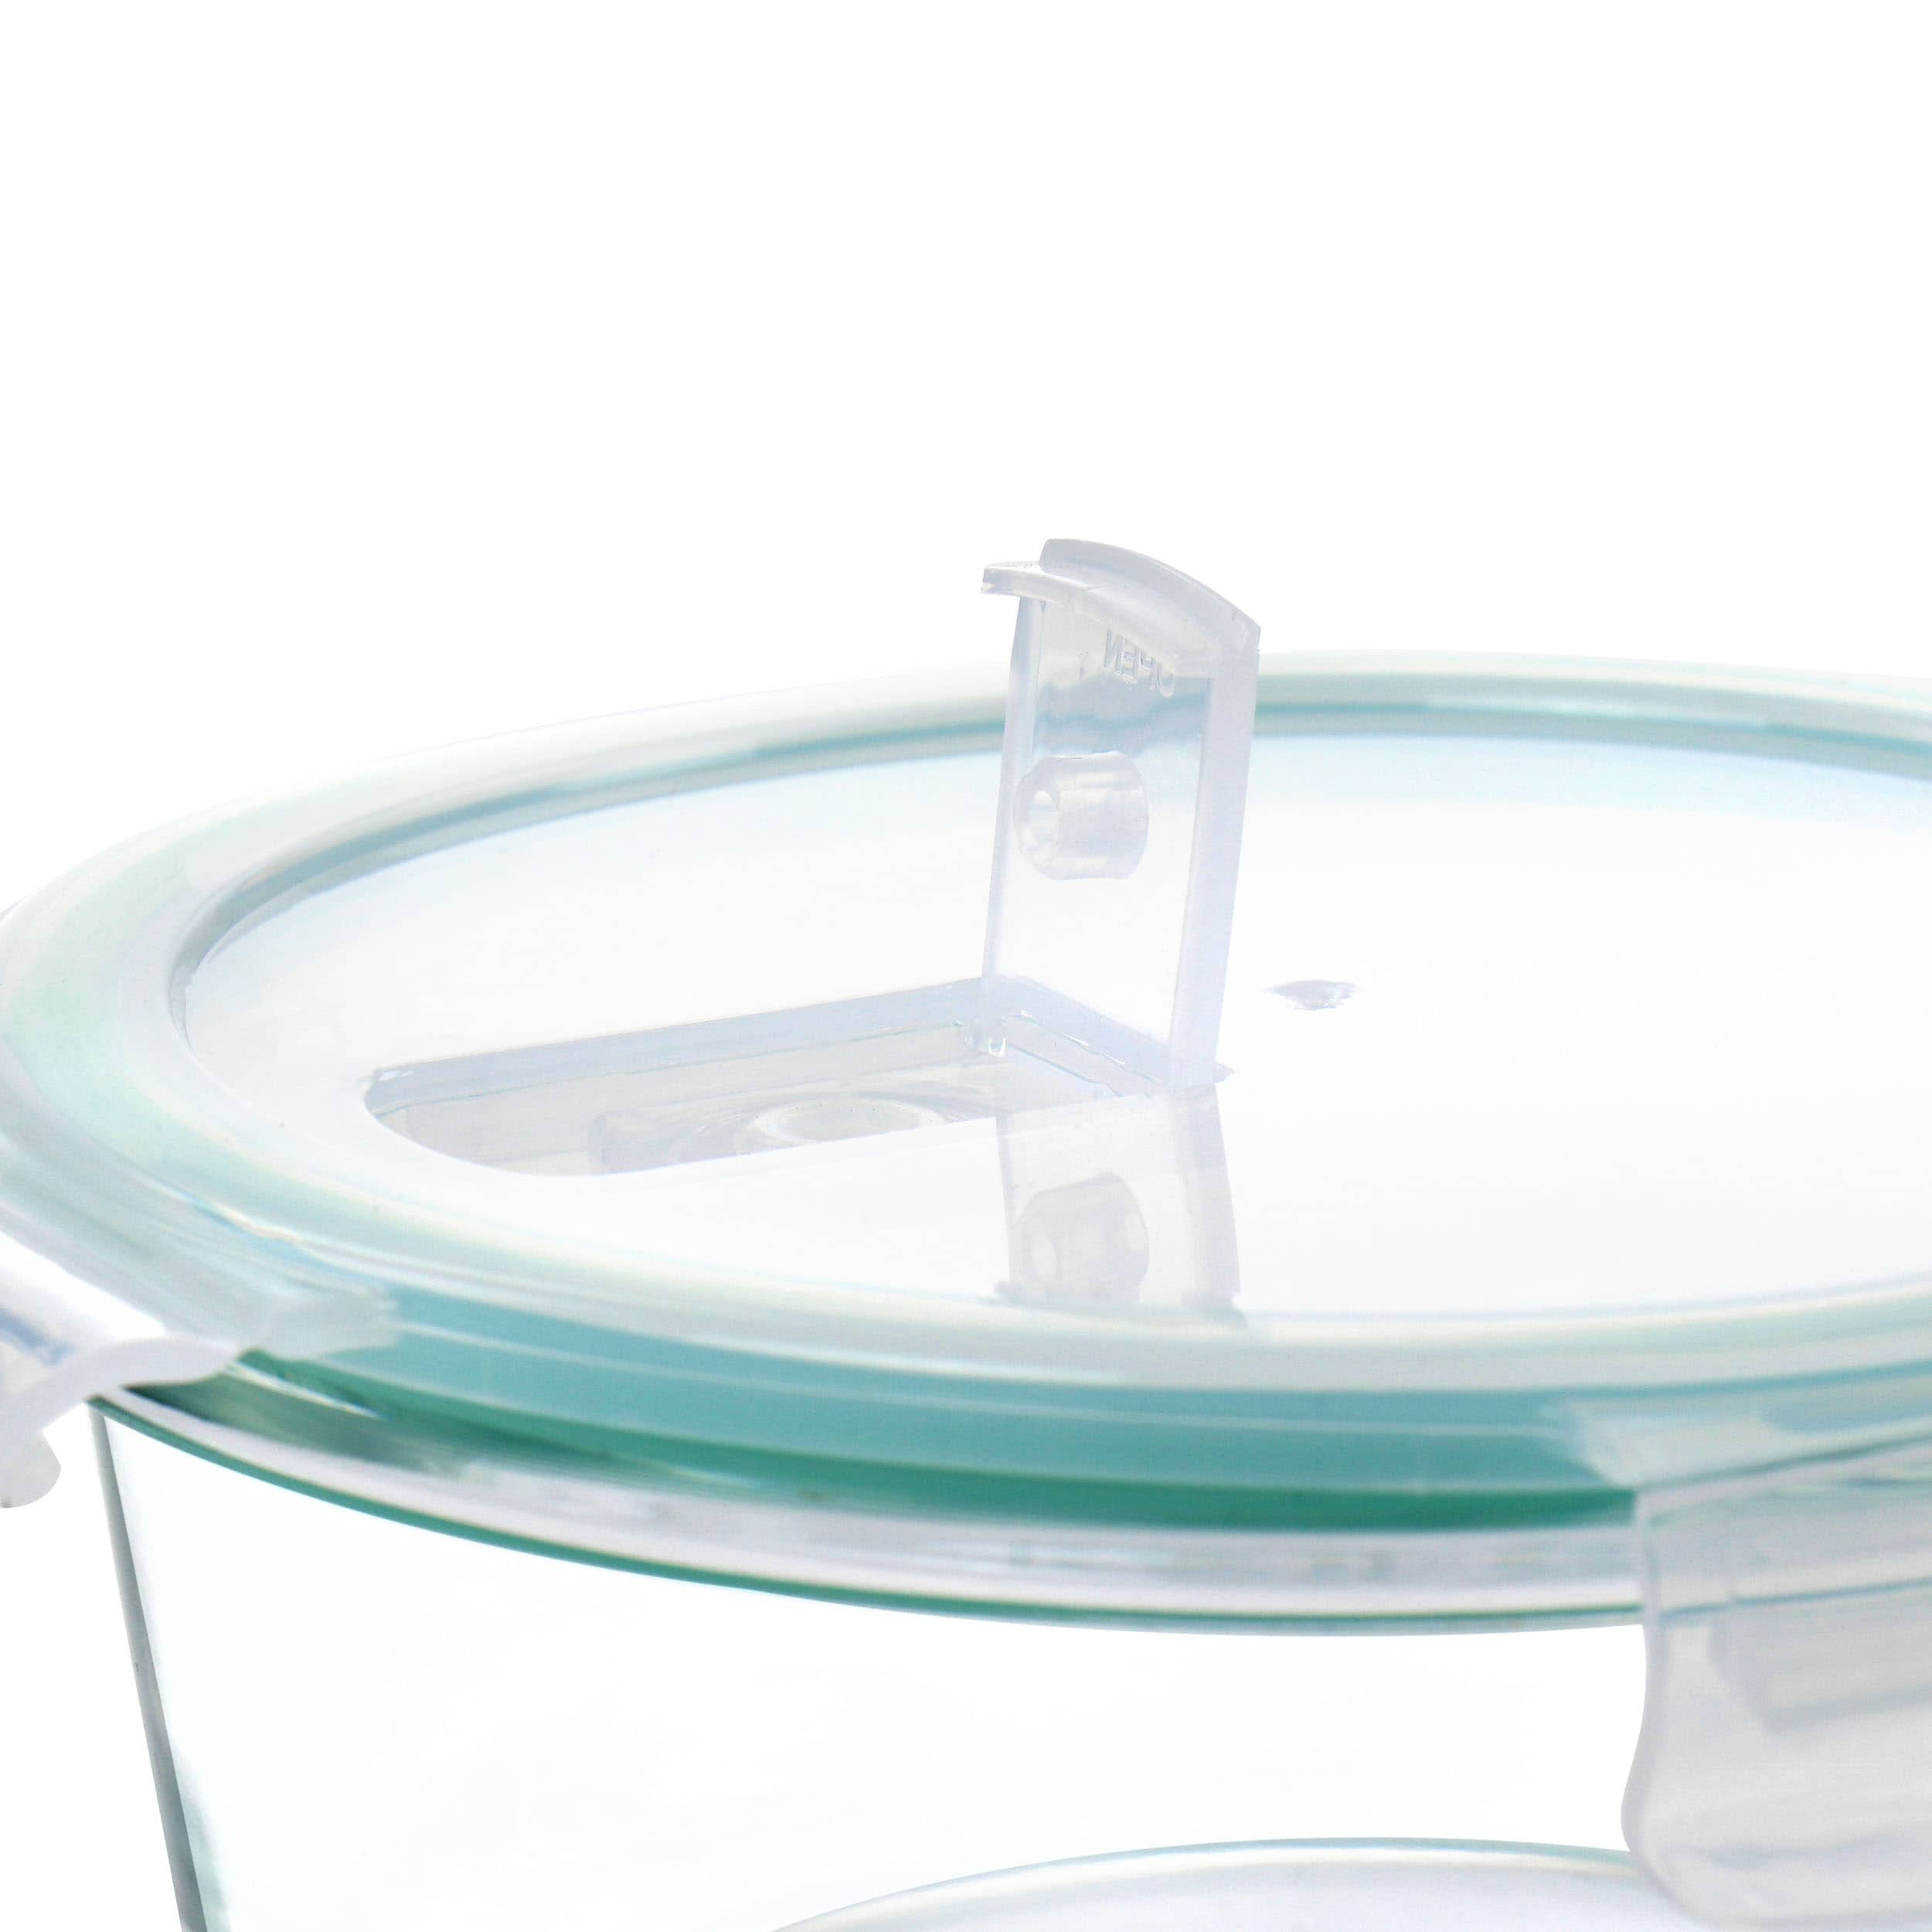 Martha Stewart 6-Pack Multisize Glass Bpa-free Reusable Food